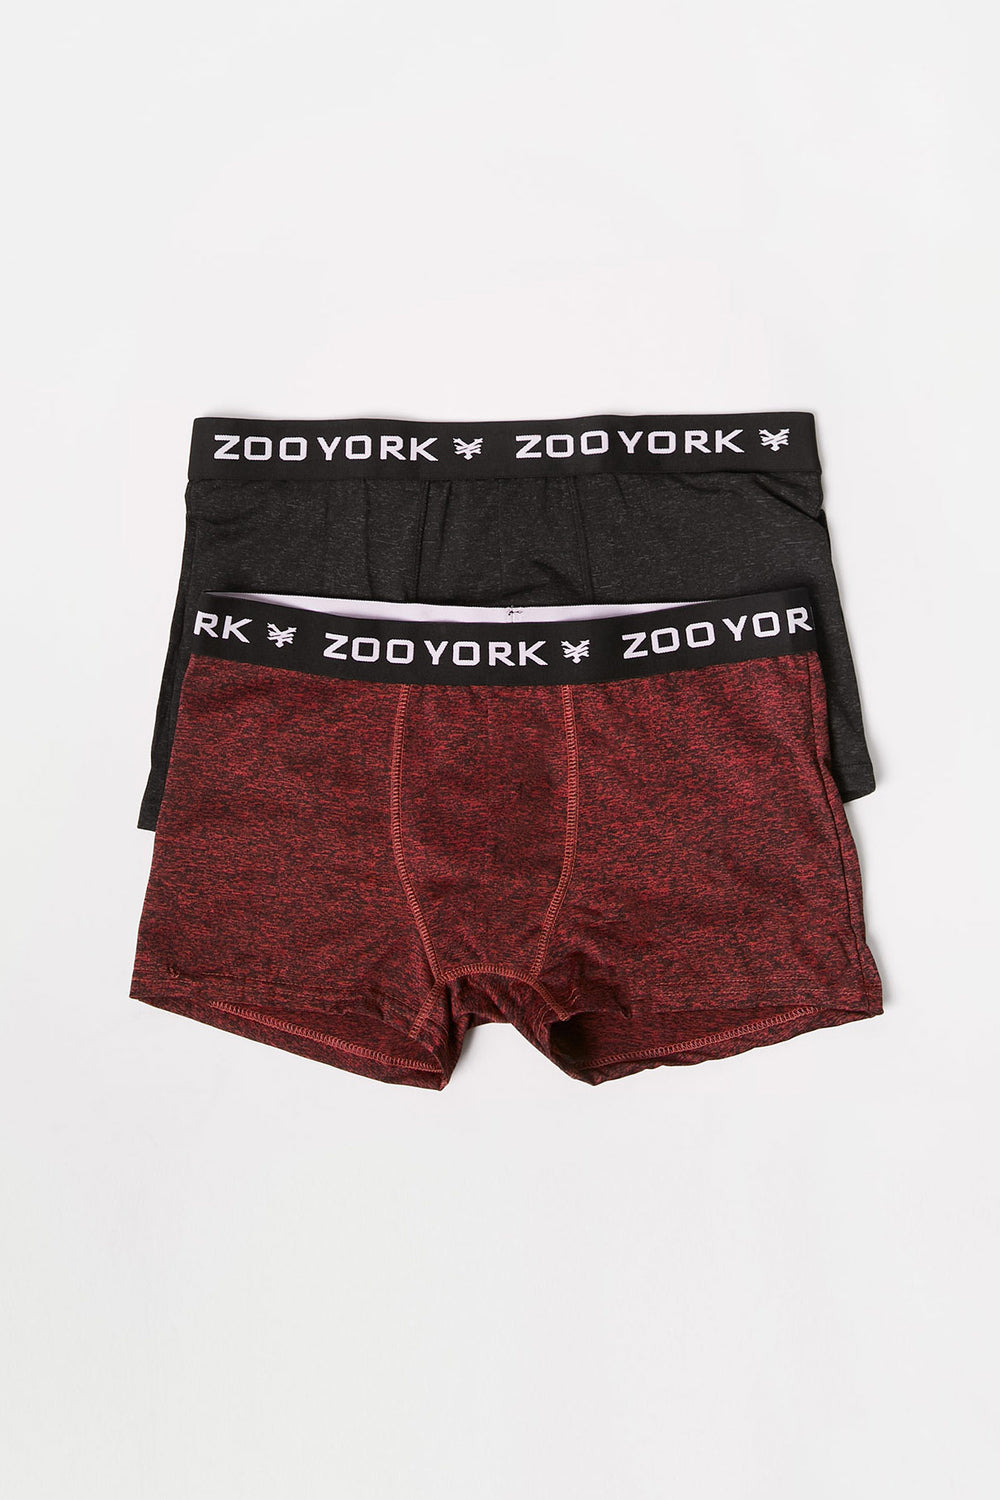 Zoo York Mens 2-Pack Space Dye Boxer Briefs Burgundy